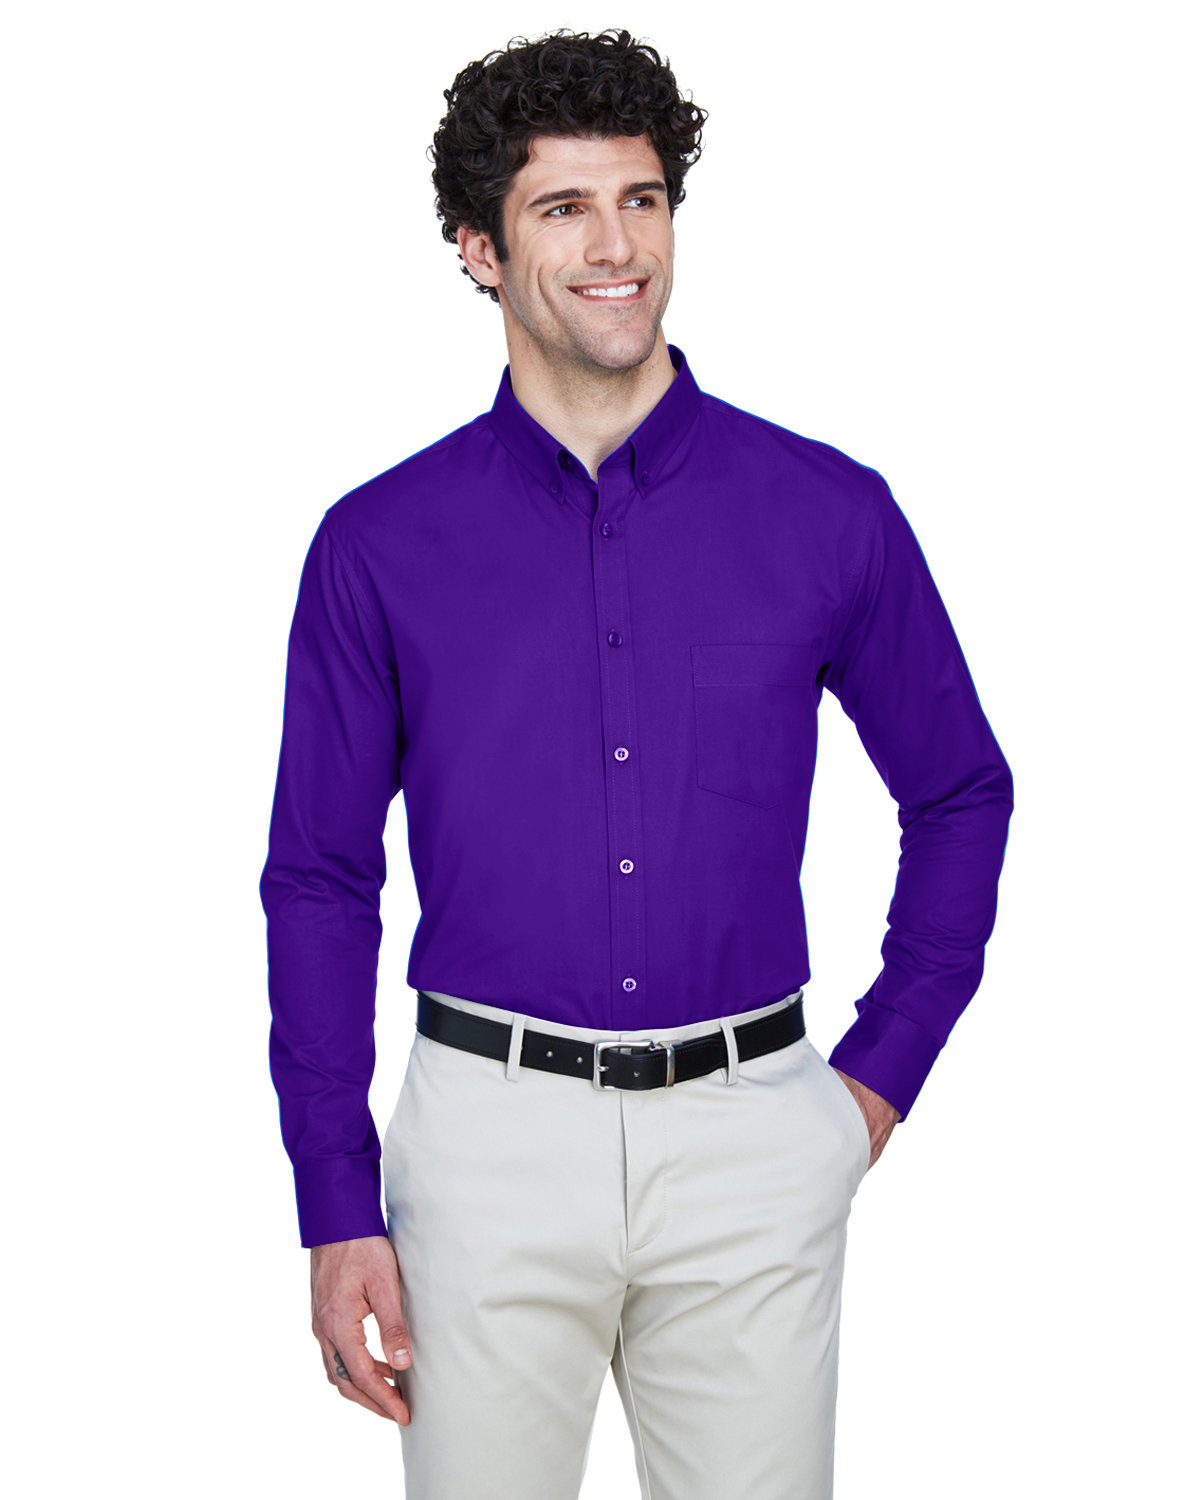 Core 365 Men's Operate Long-Sleeve Twill Shirt CAMPUS PURPLE 